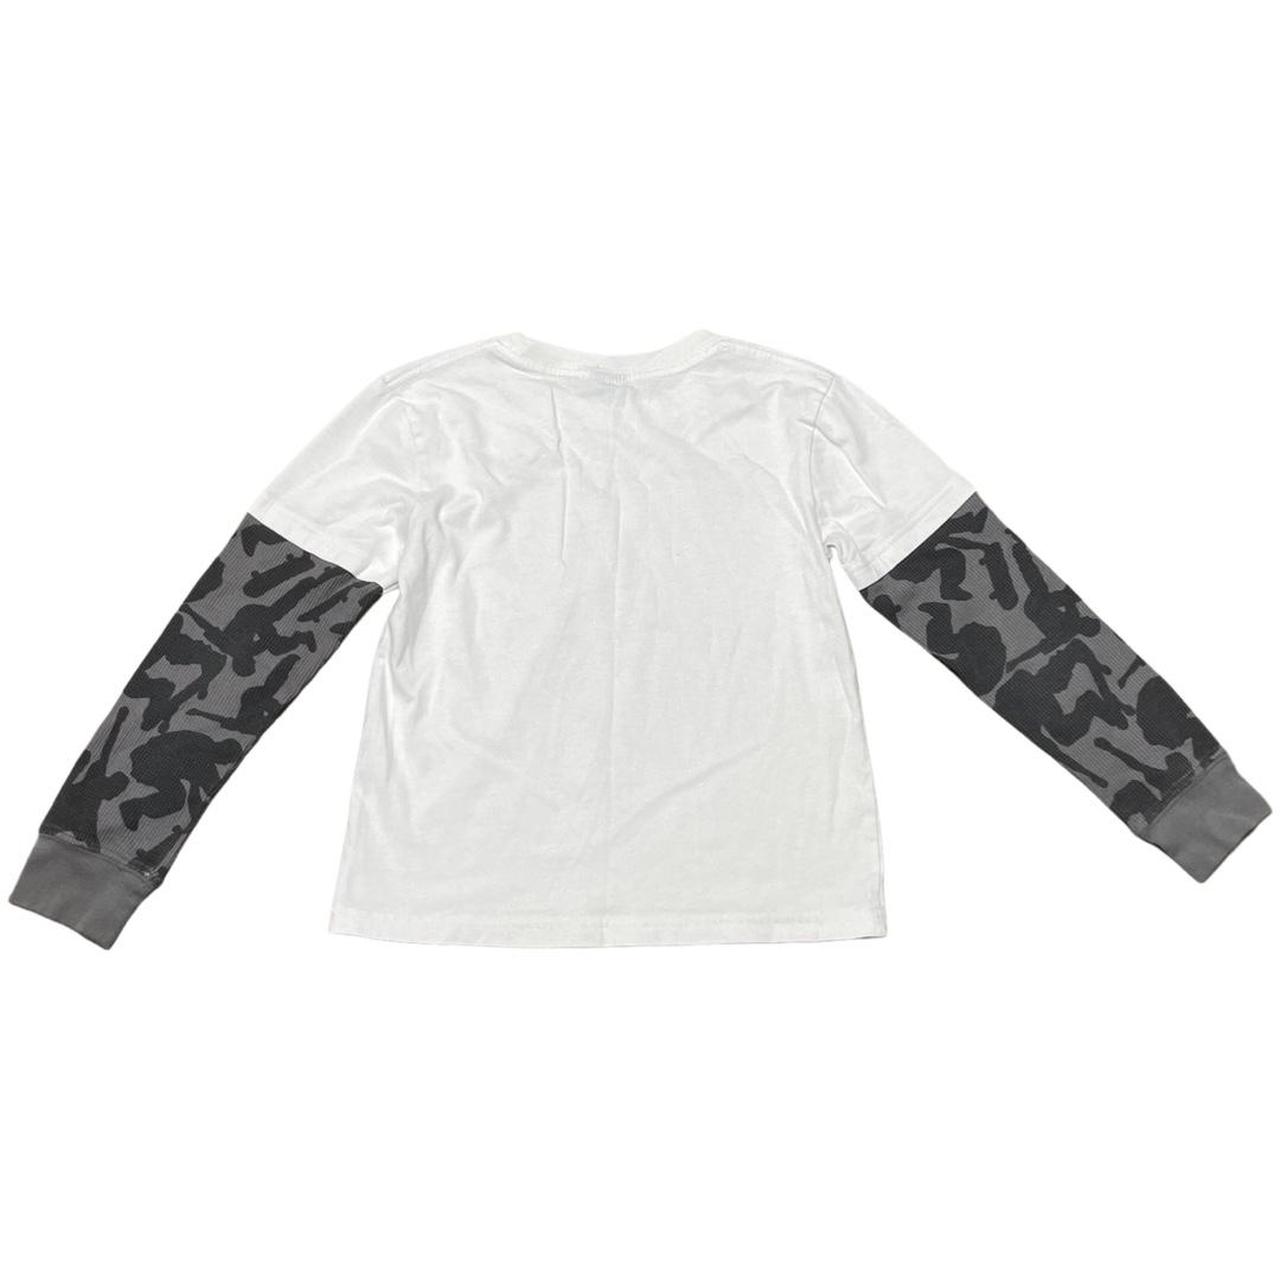 Hybrid Apparel Black and White Shirt (3)